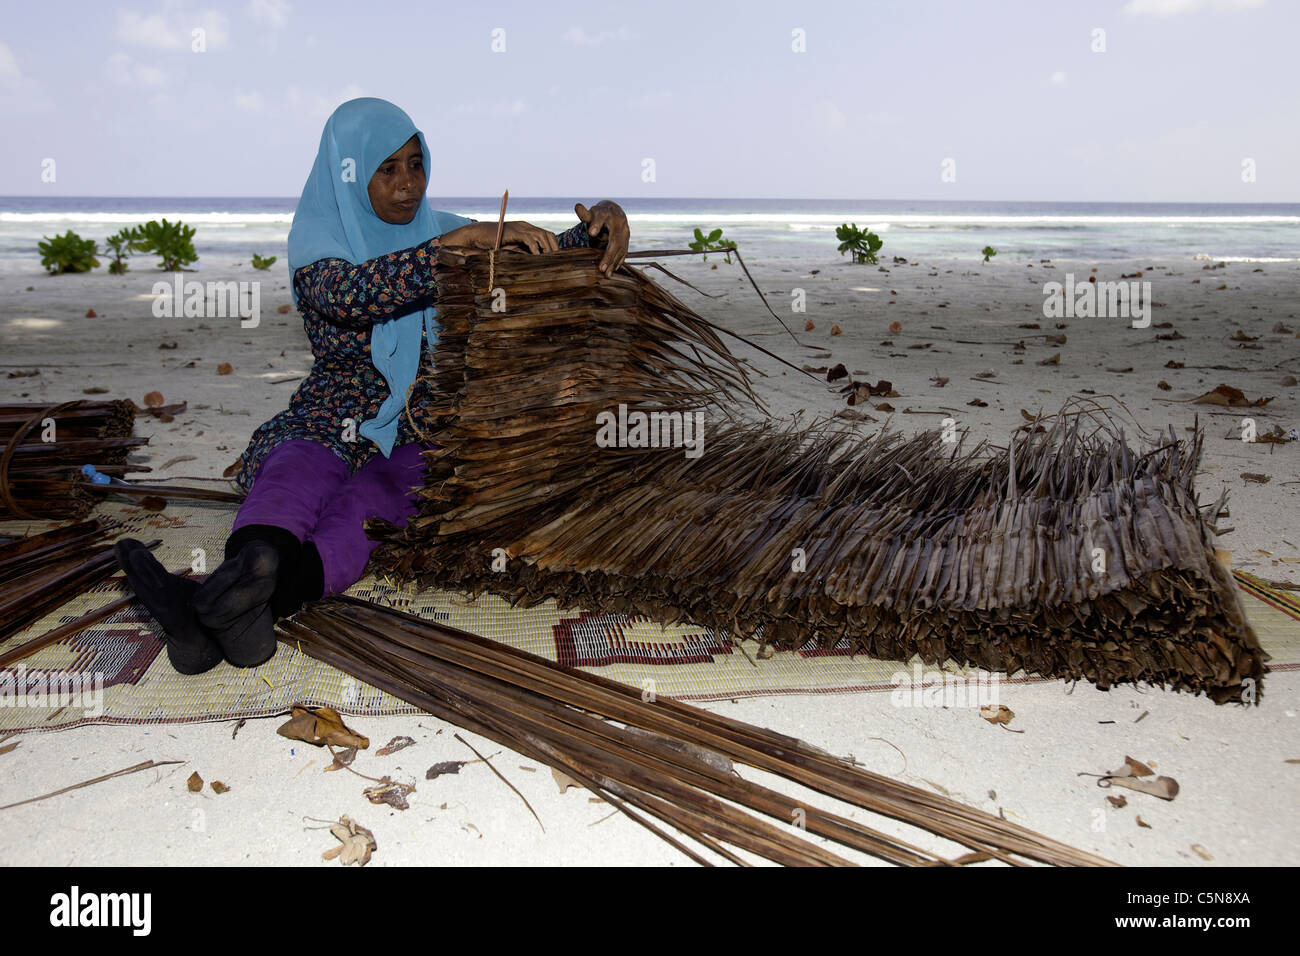 Woman at work, Indian Ocean, Maldives Stock Photo